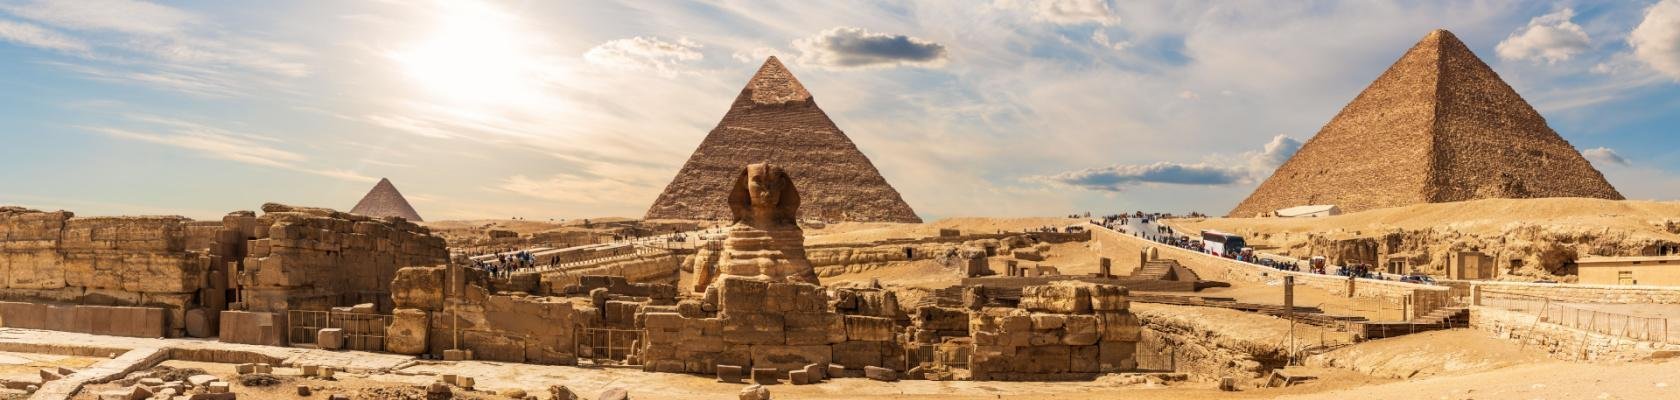 Caïro - Piramide & Sfinx van Gizeh